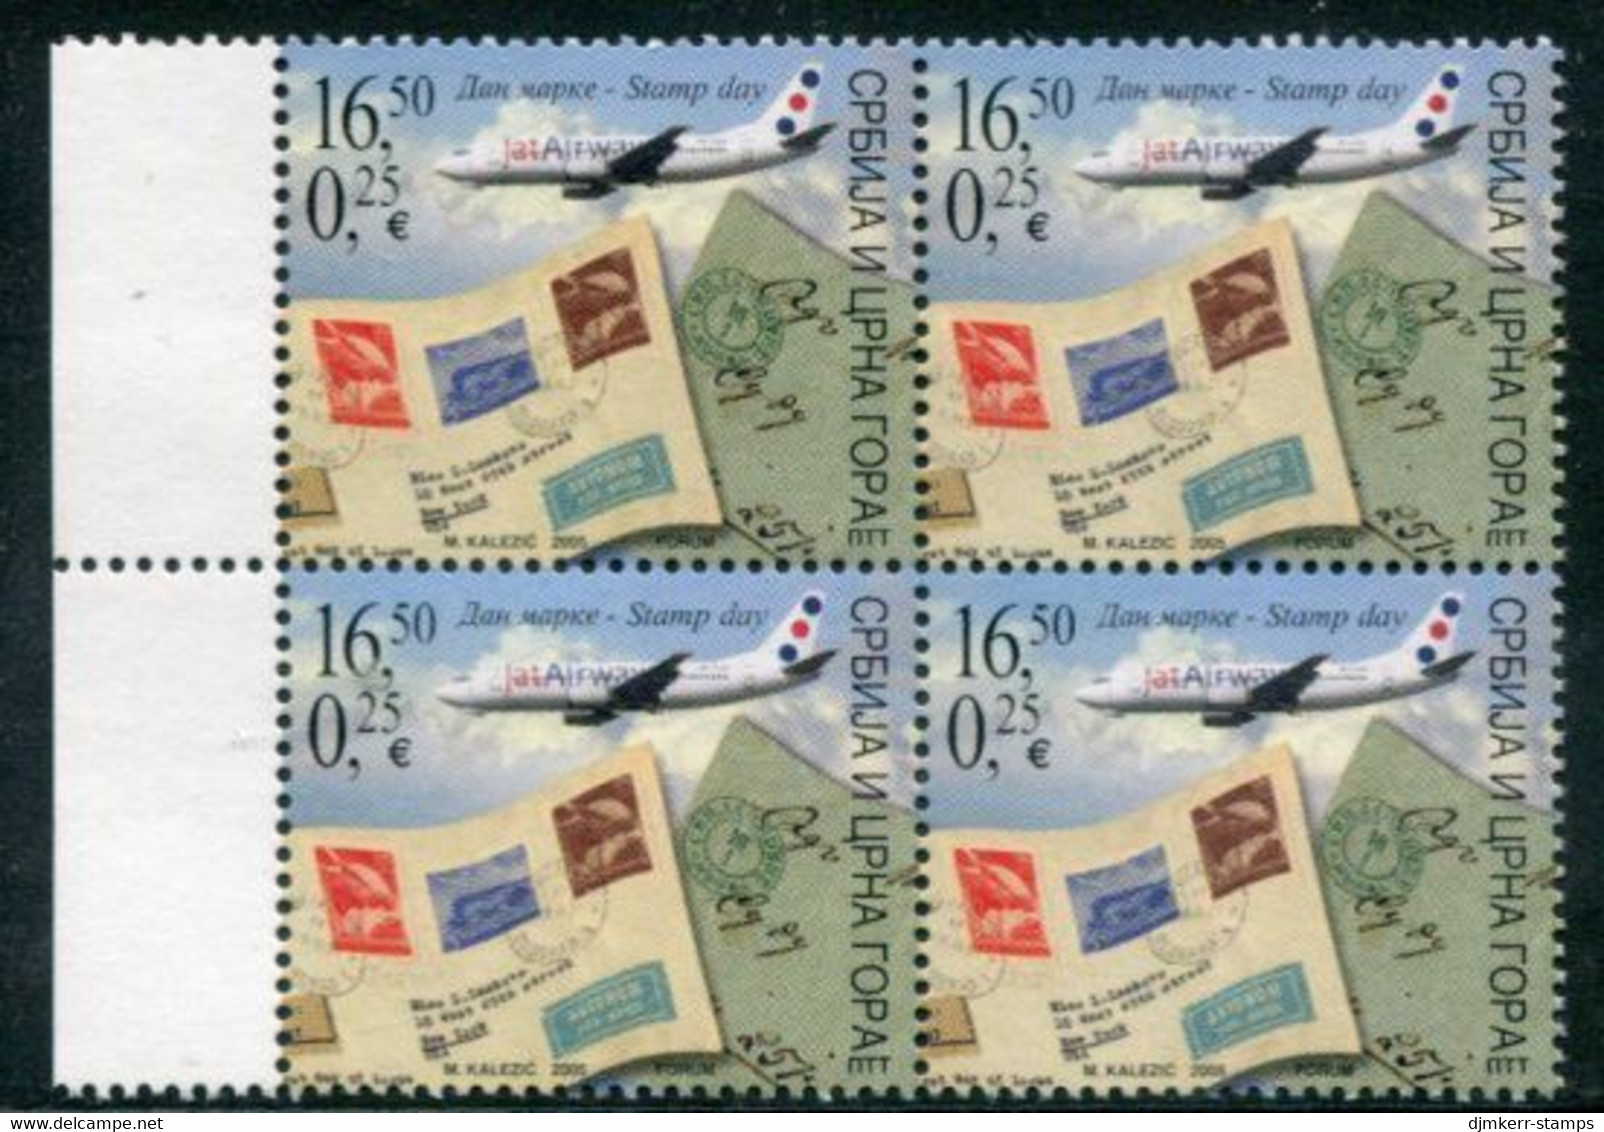 YUGOSLAVIA (Serbia & Montenegro)  2005 Stamp Day Block Of 4 MNH / **.  Michel 3295 - Unused Stamps